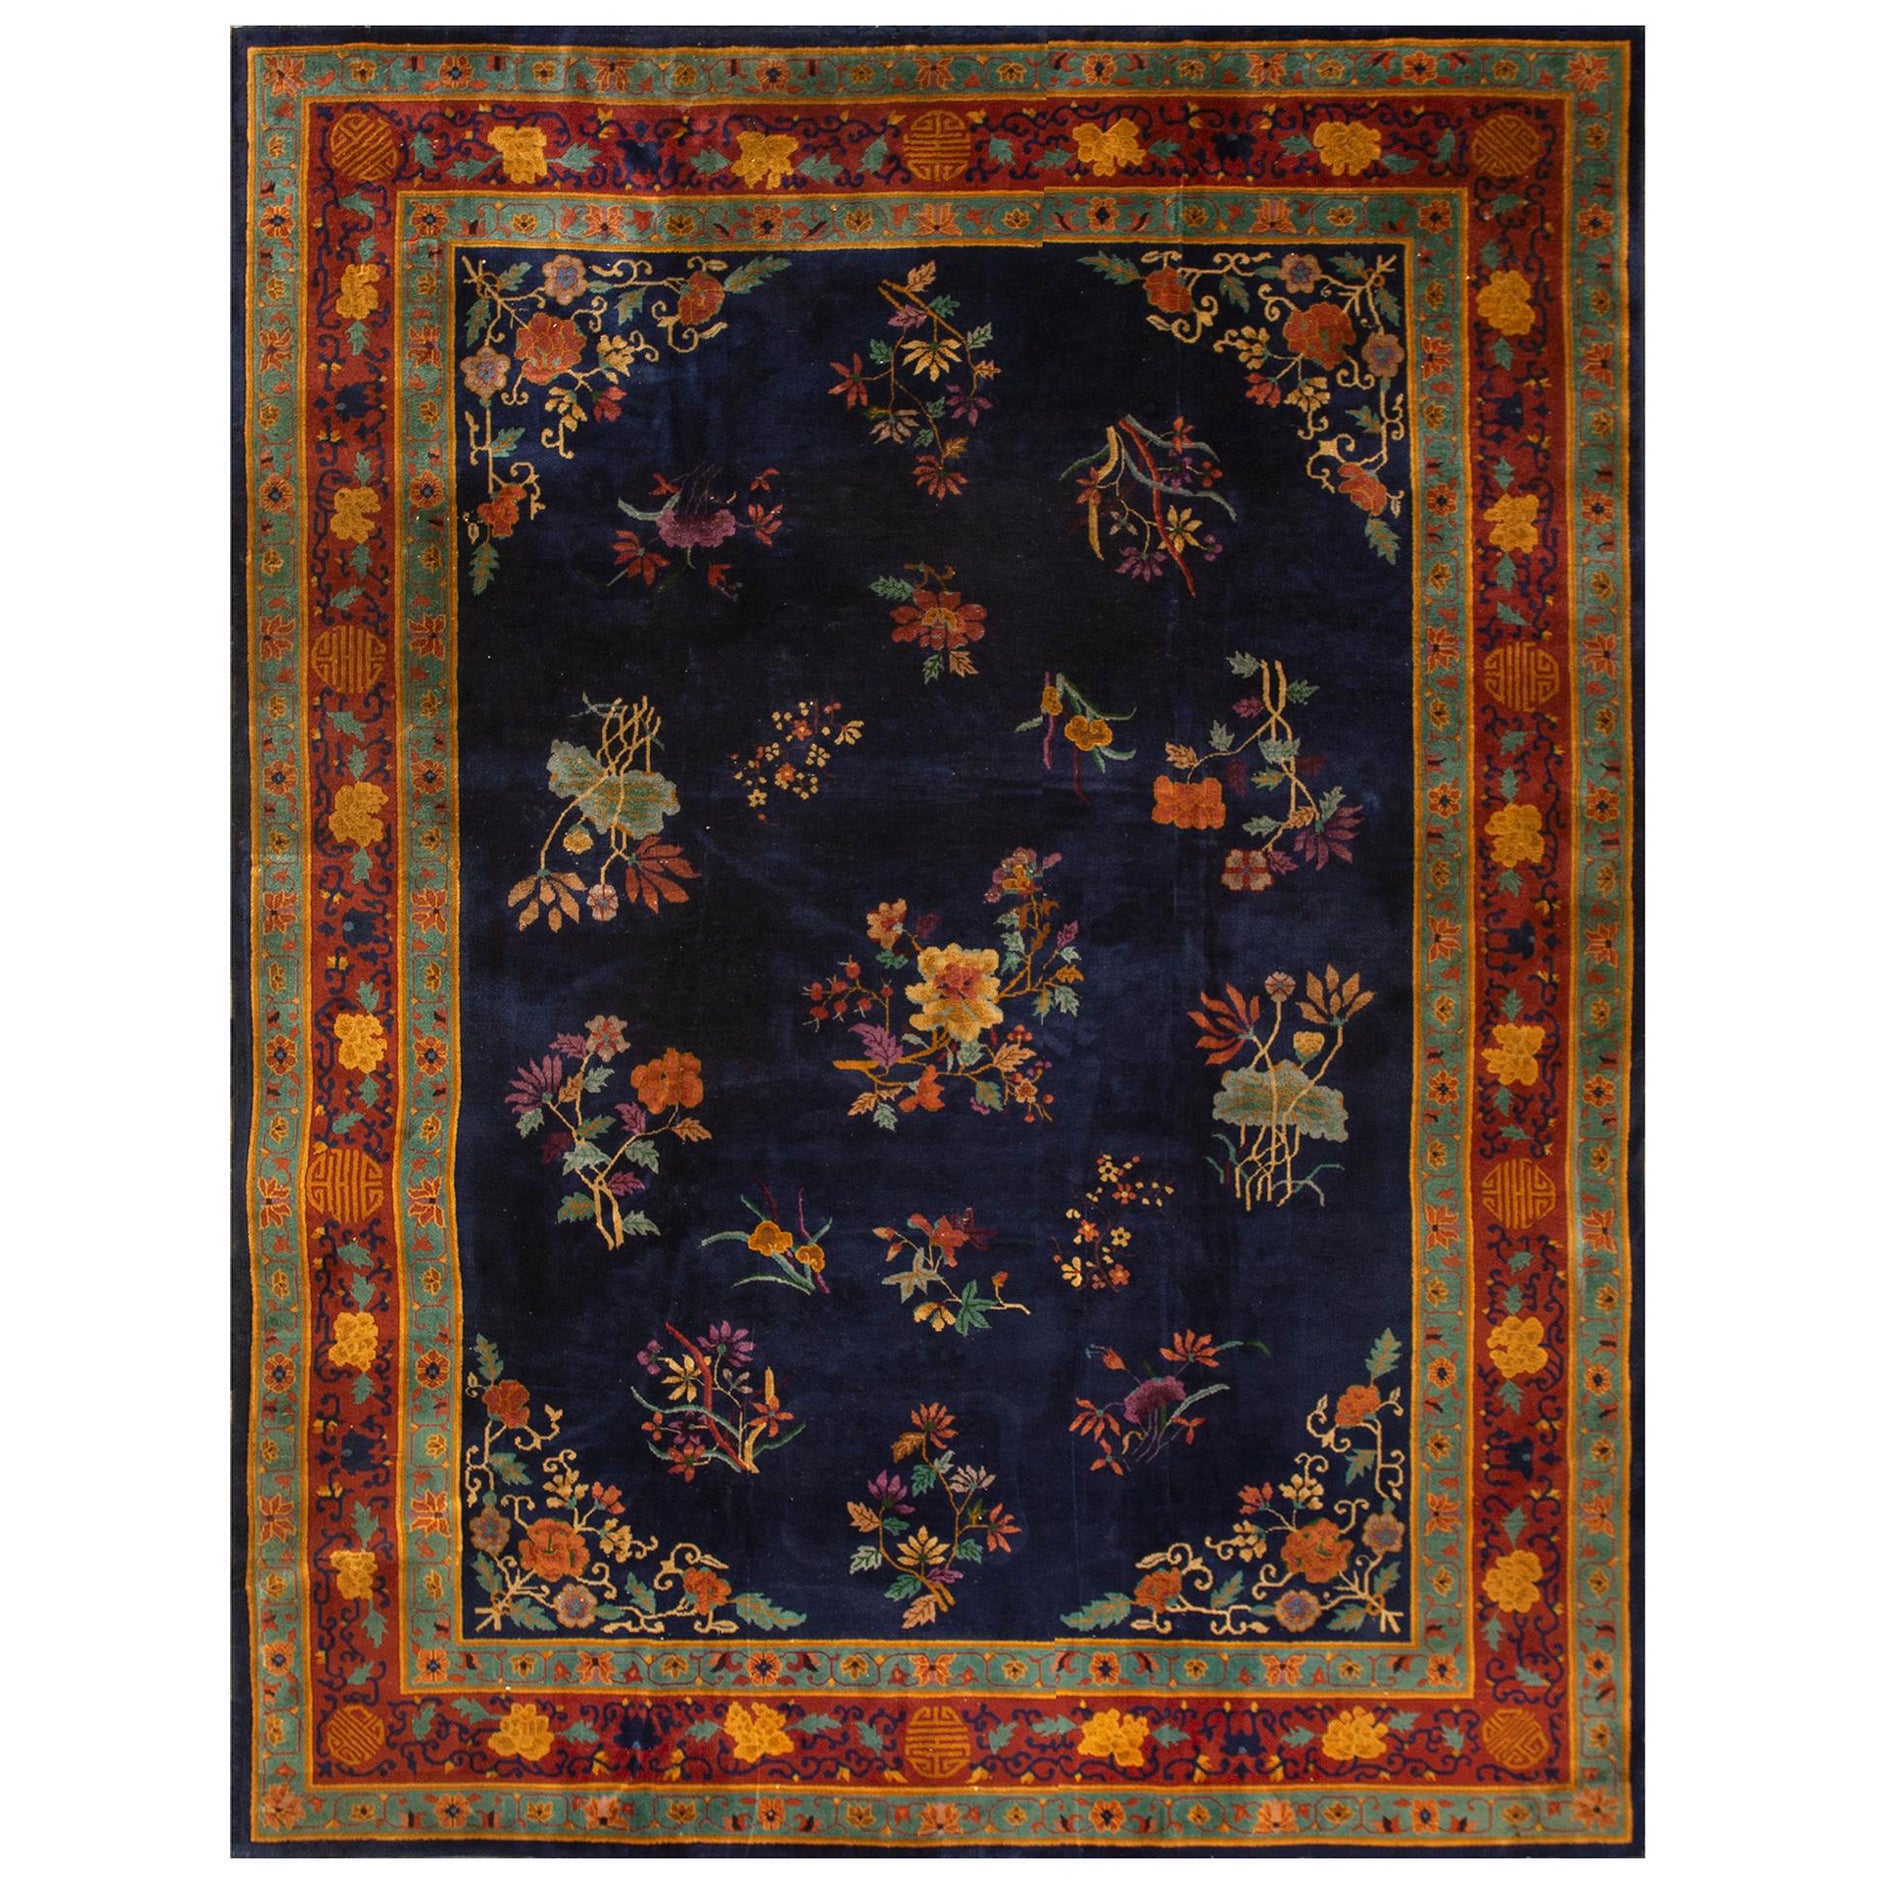 1920s Chinese Art Deco Carpet ( 8'10" x 11'7" - 269 x 353 )